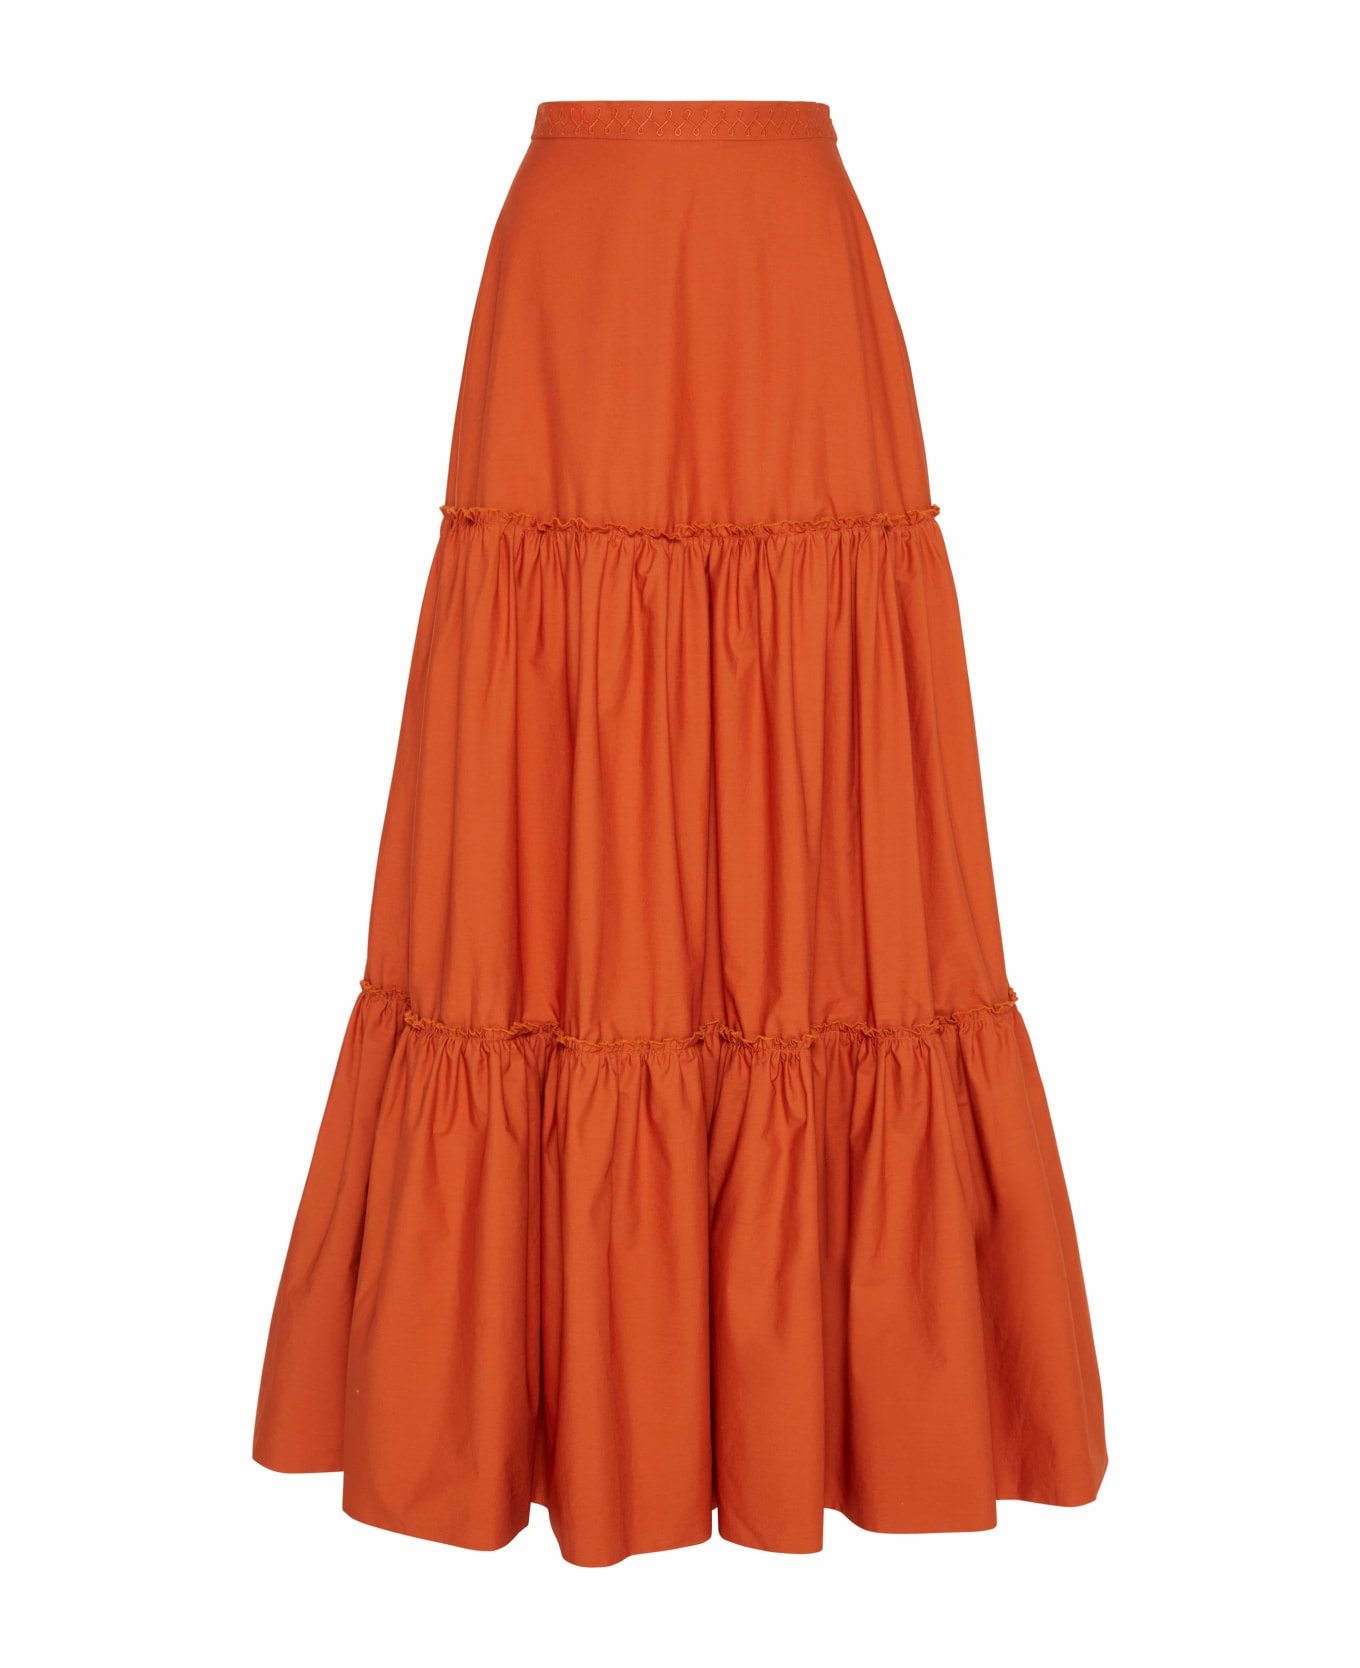 Amotea Charlotte Long Skirt In Orange Poplin - Orange